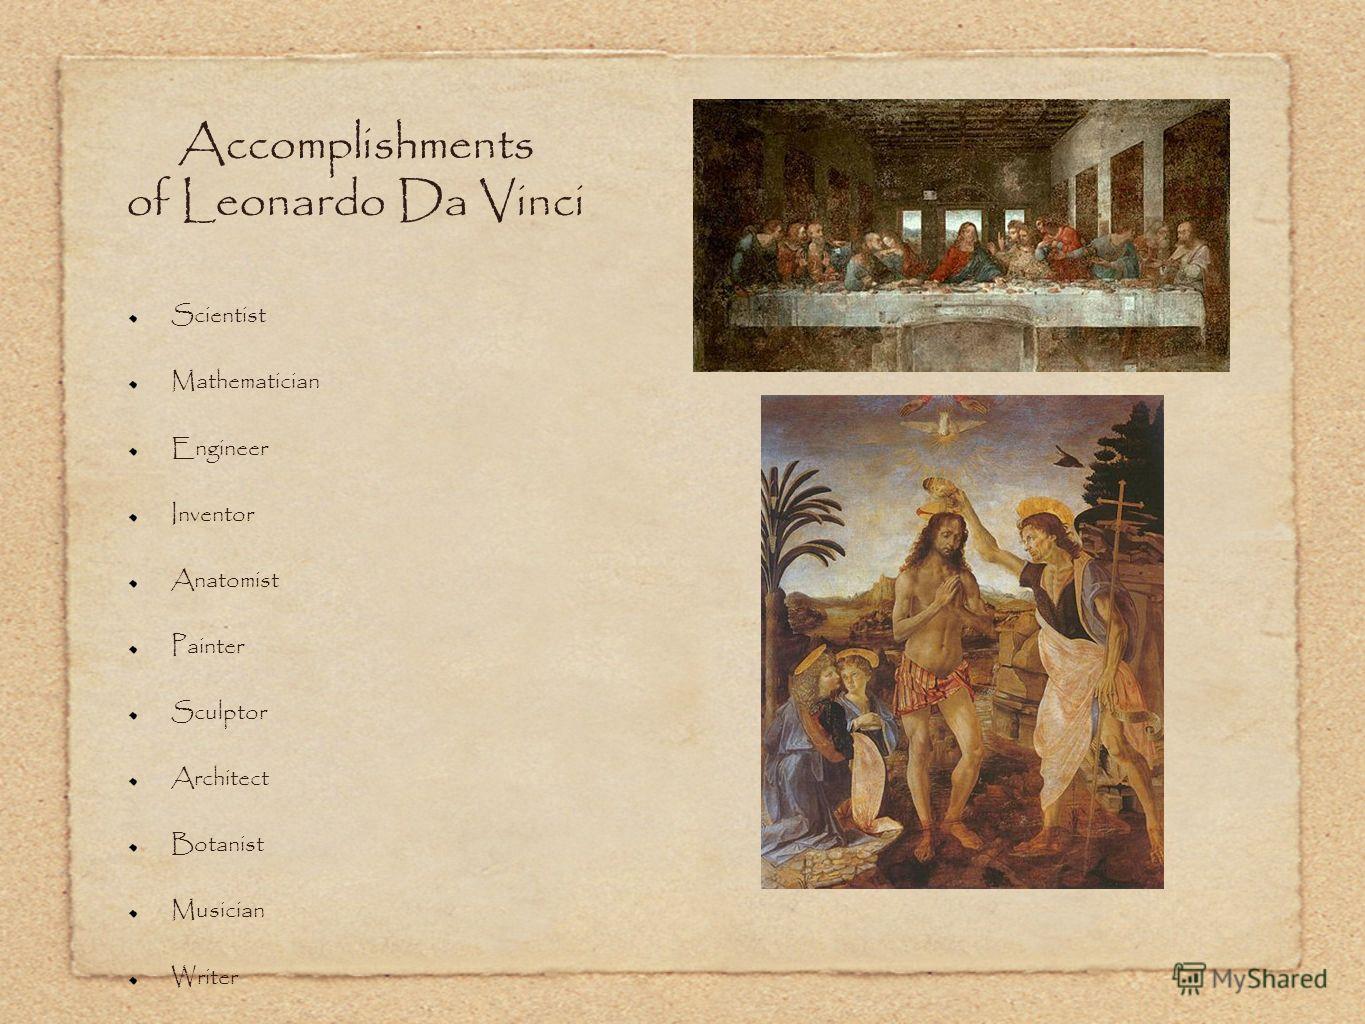 Топик: Leonardo da Vinci